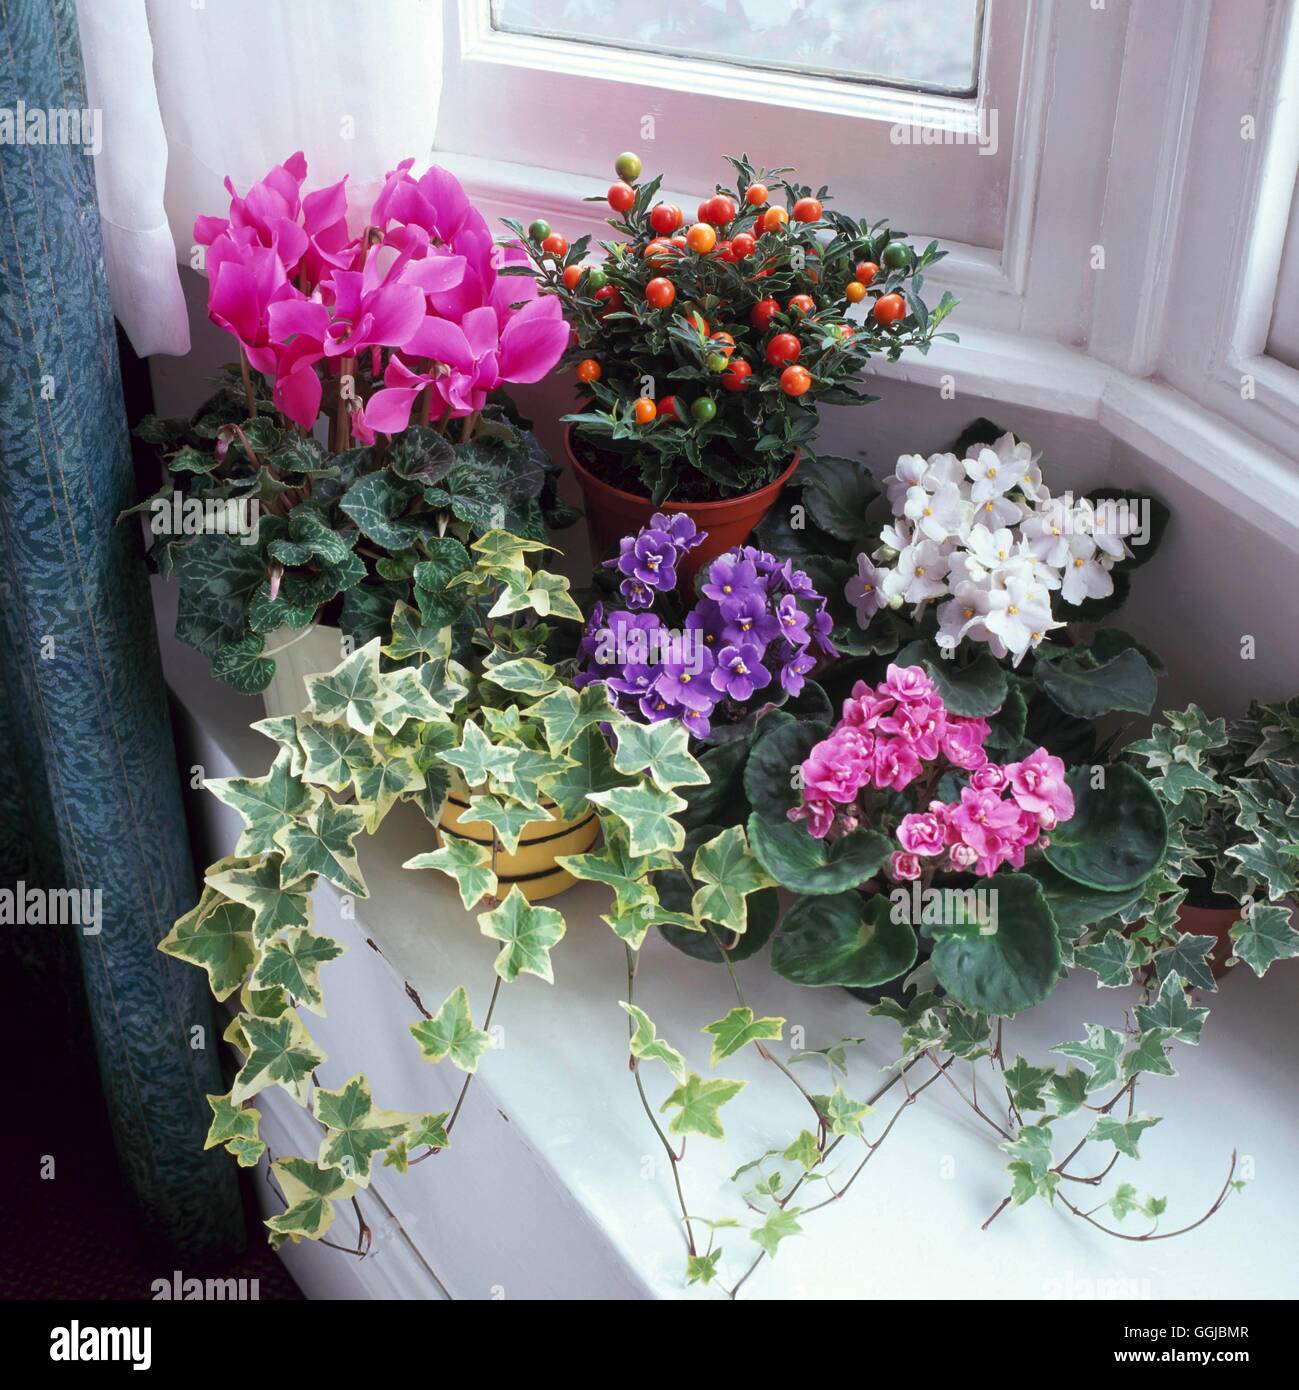 Zimmerpflanzen - gemischt - Cyclamen Solanum Hedera und Saintpaulia HPS053633 Stockfoto